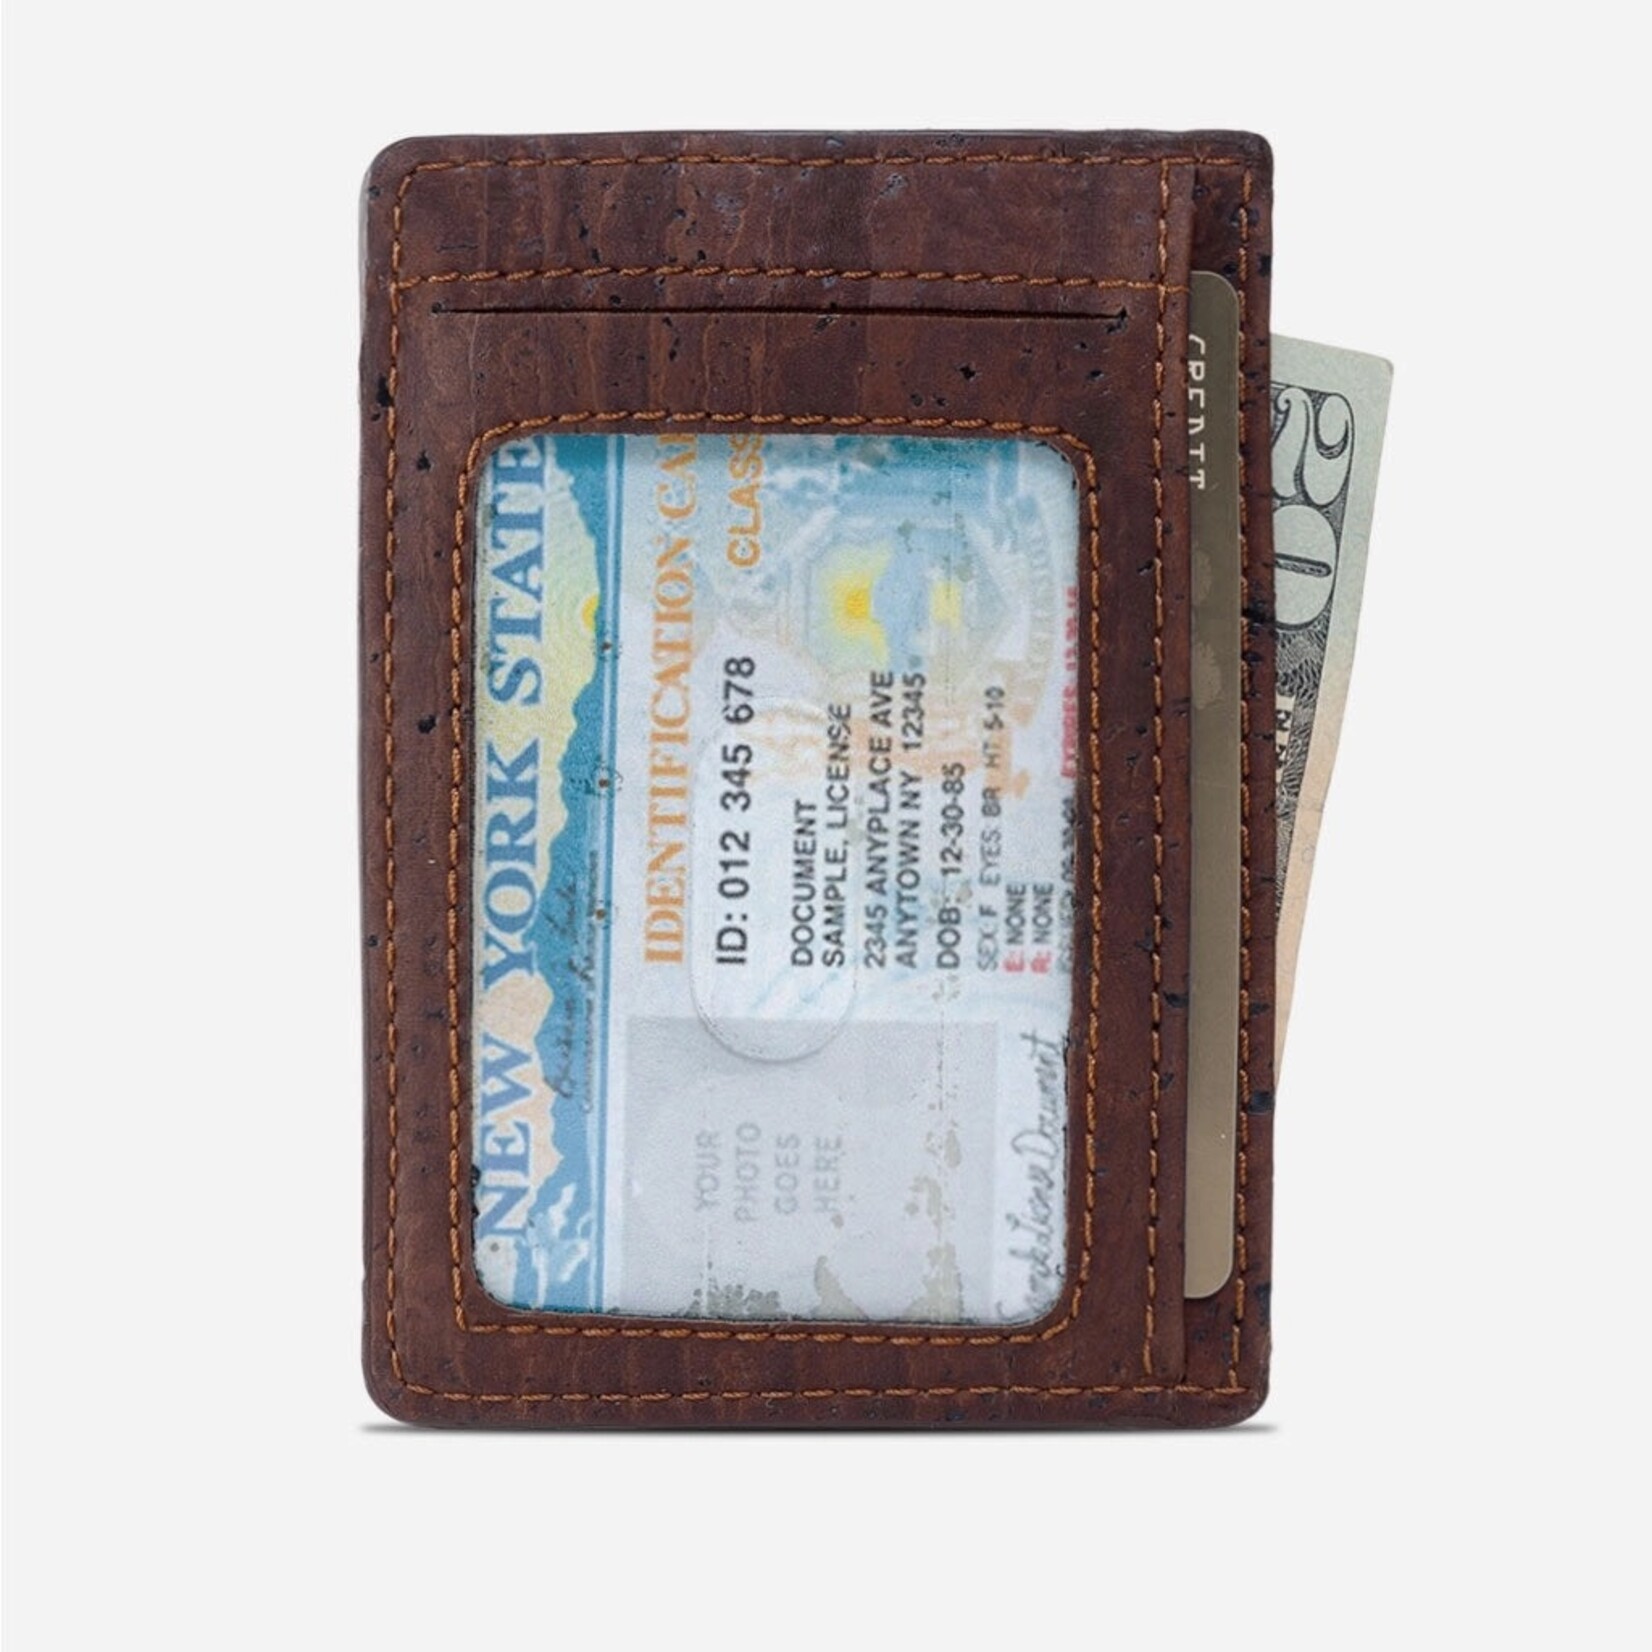 Corkor Airtag Wallet Cards Holder - Brown